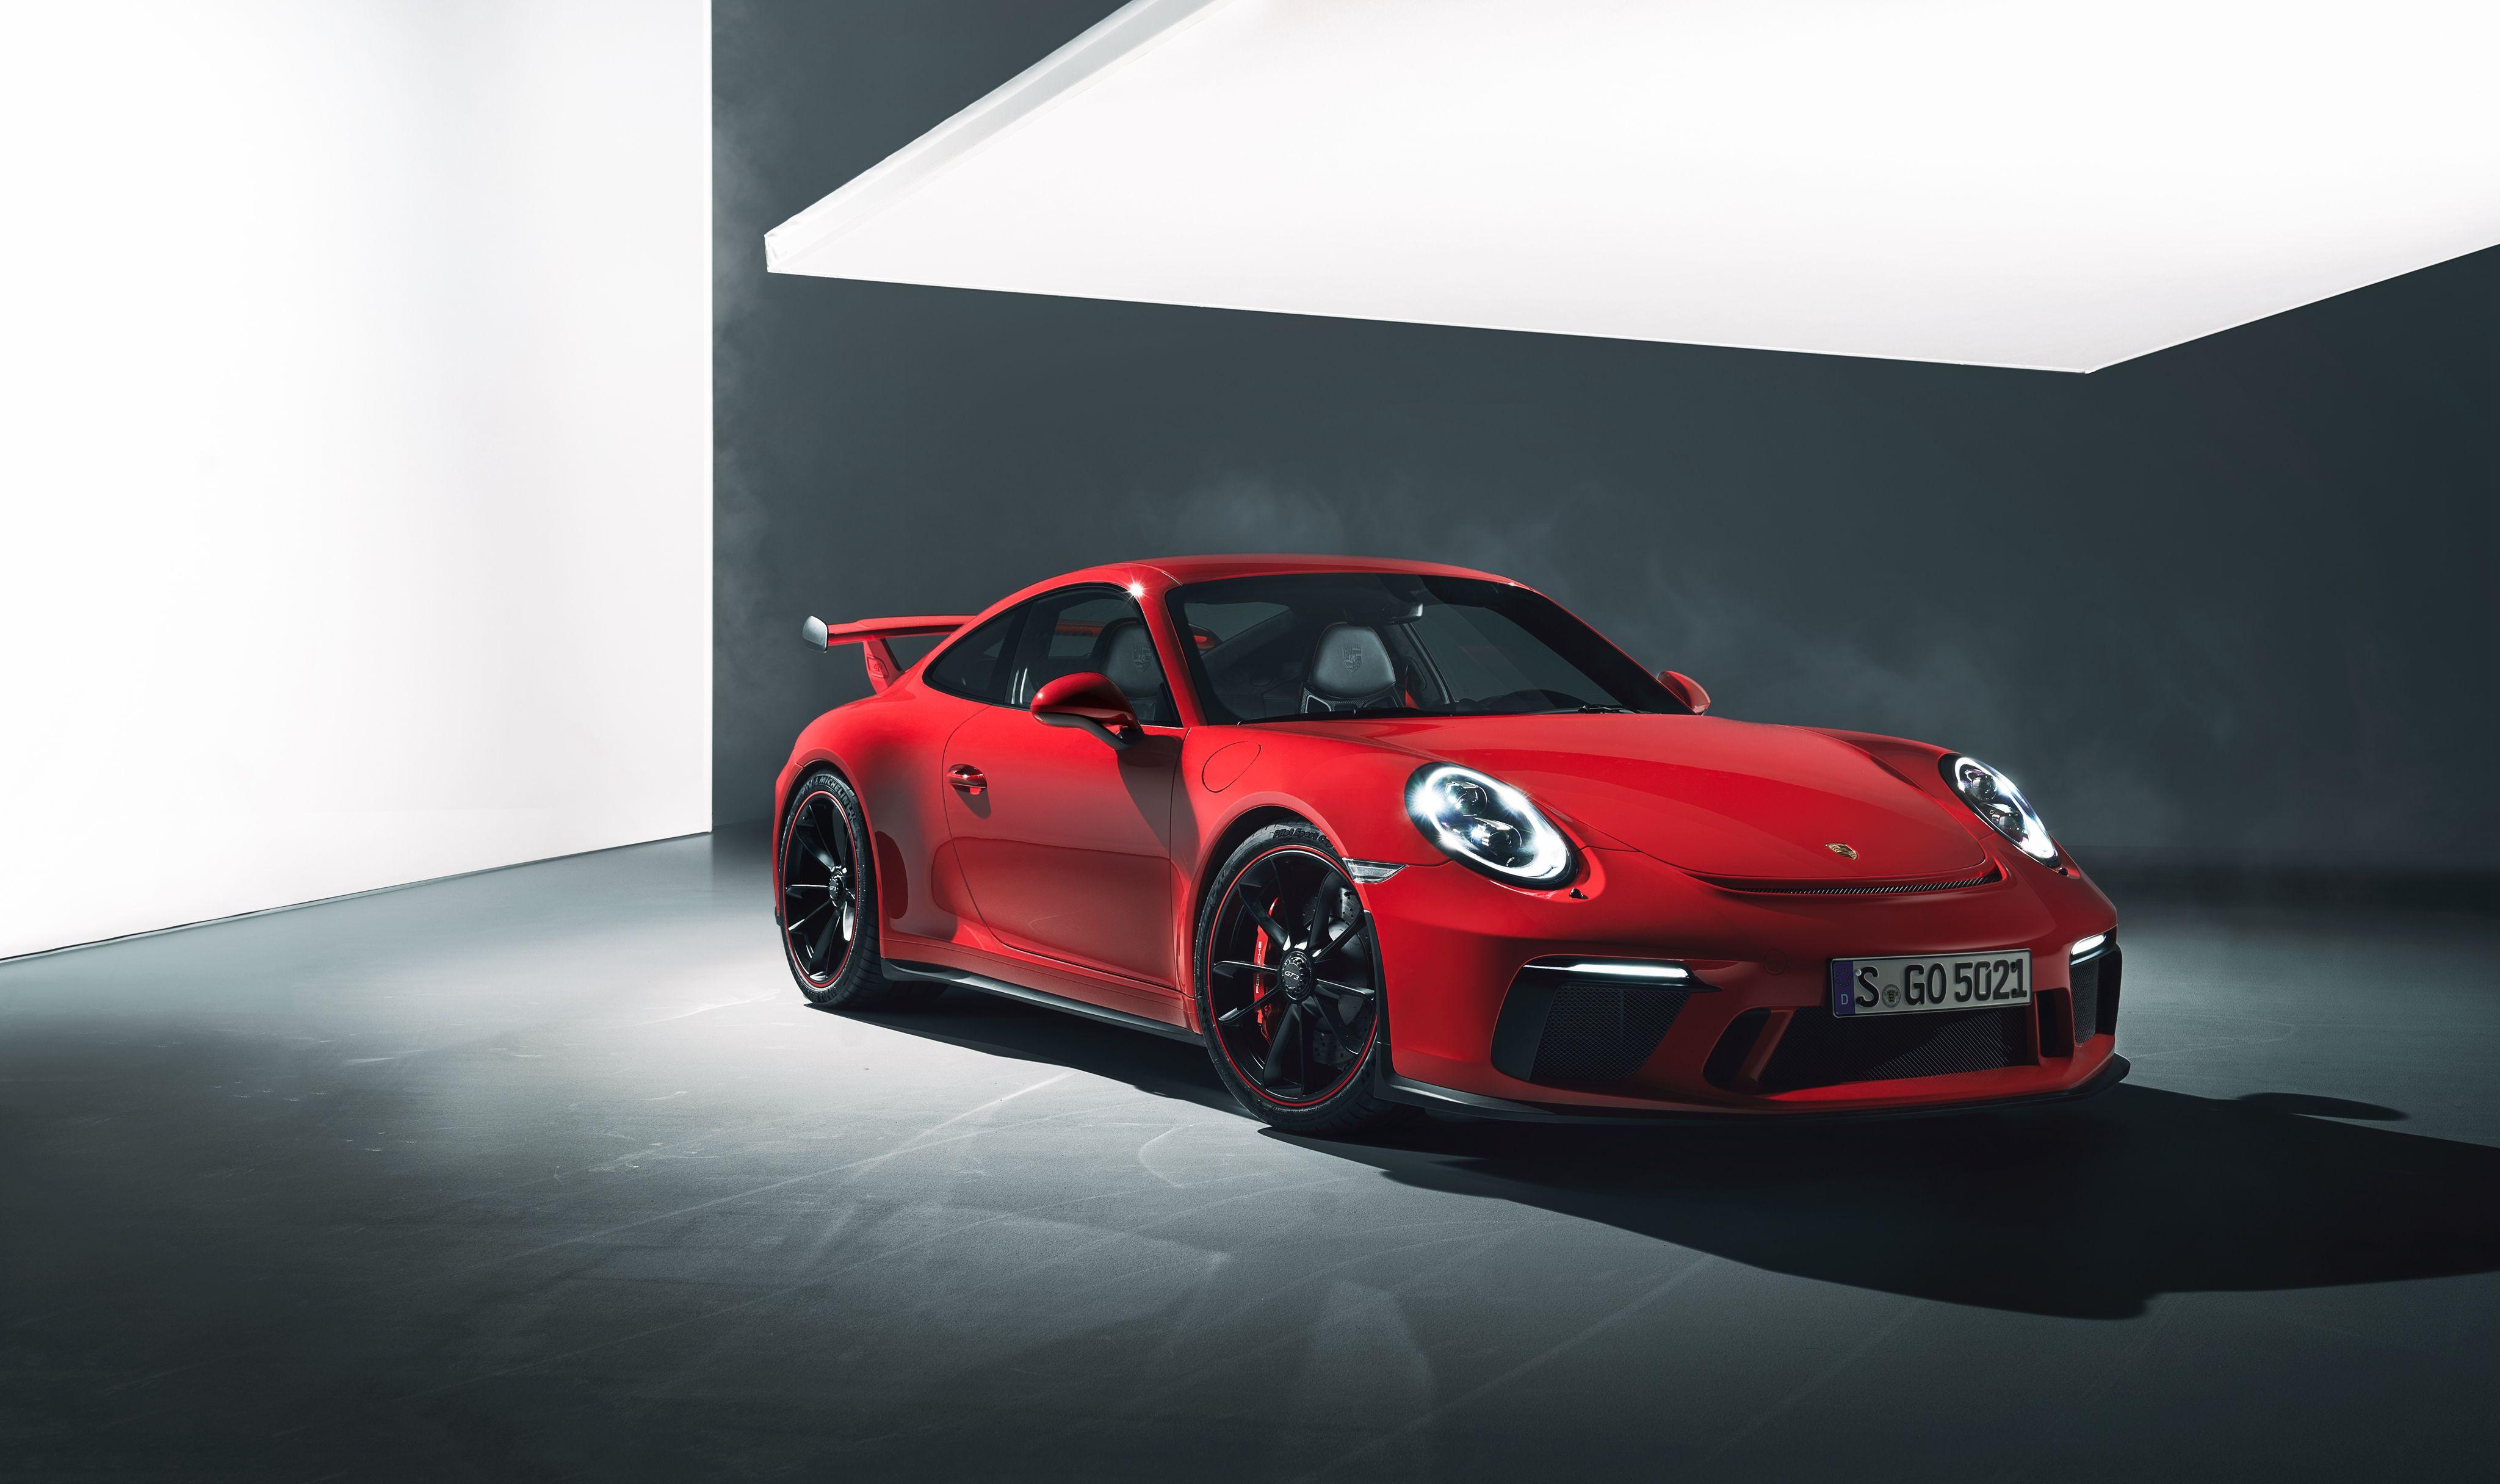 Porsche 911 Gt3 2017 Wallpaper High Quality Resolution For iPhone